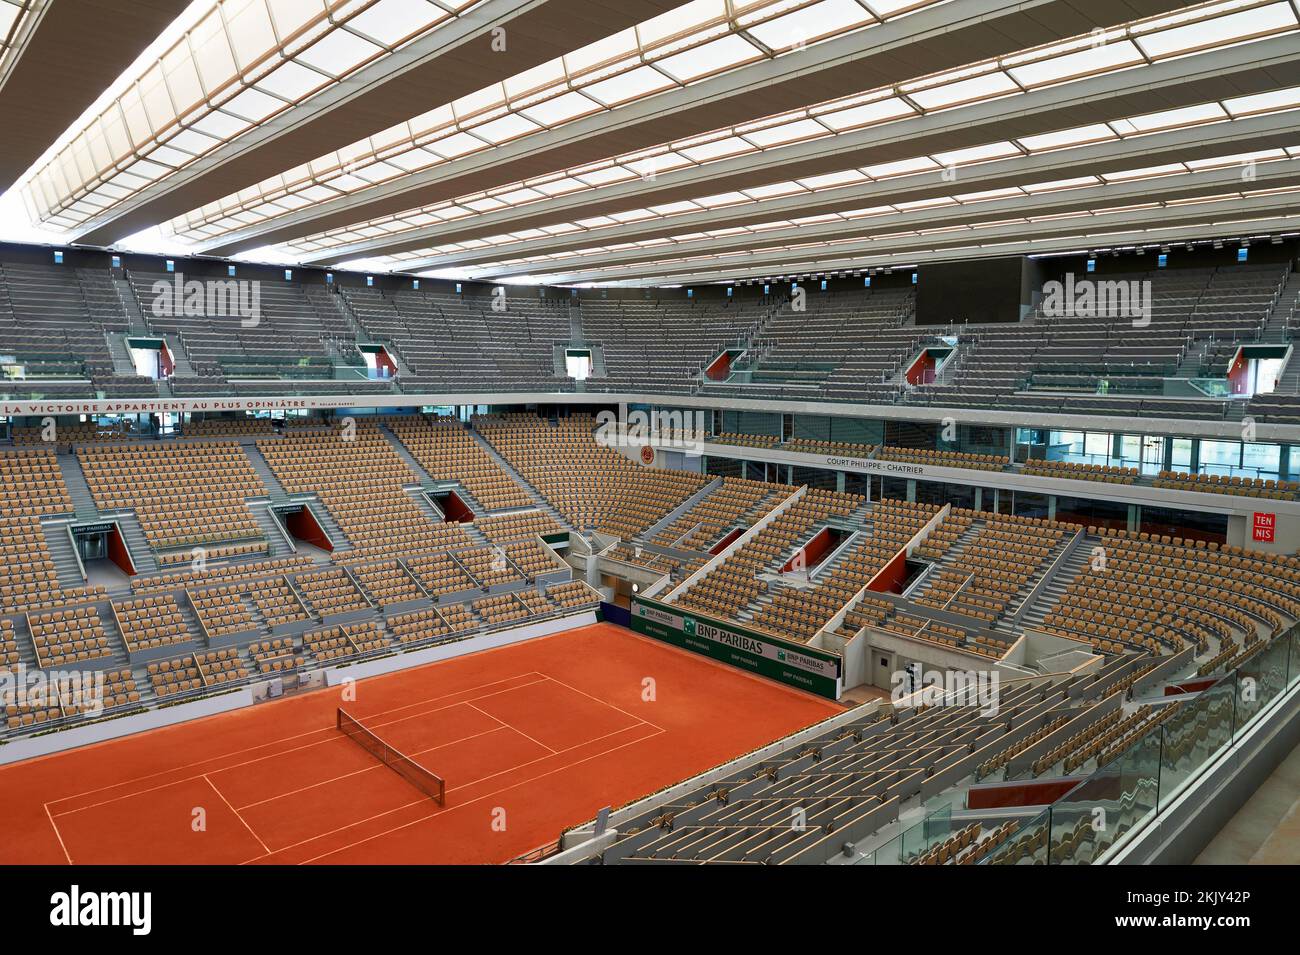 Main court of Philippe Chatrier at Roland Garros tennis complex in Paris Stock Photo